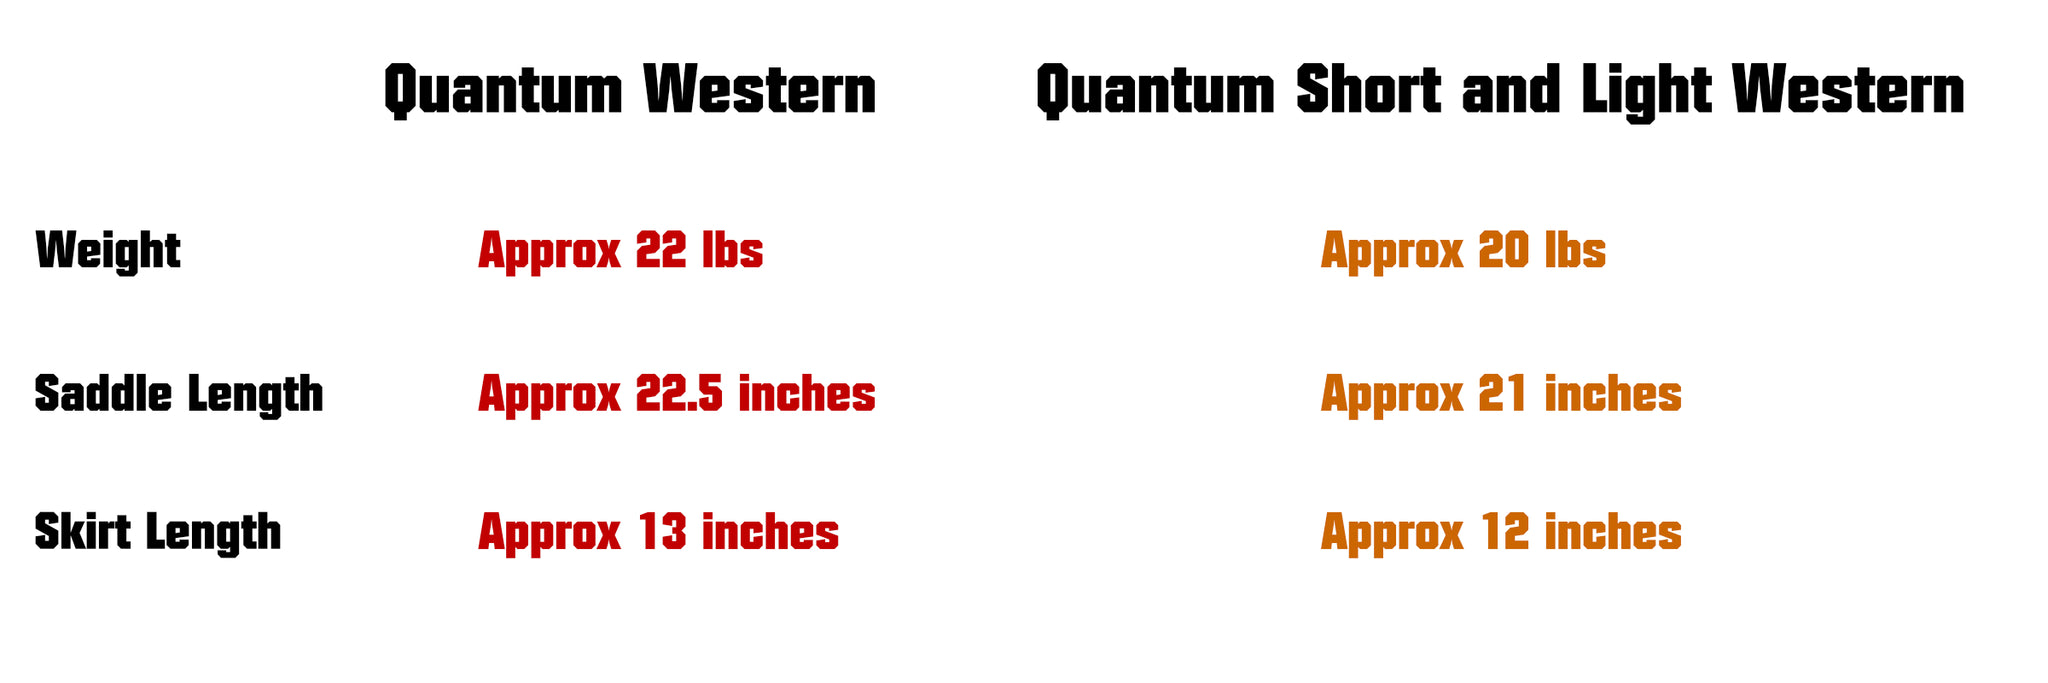 DP Saddlery Quantum Western vs DP Saddlery Quantum Short and Light Western